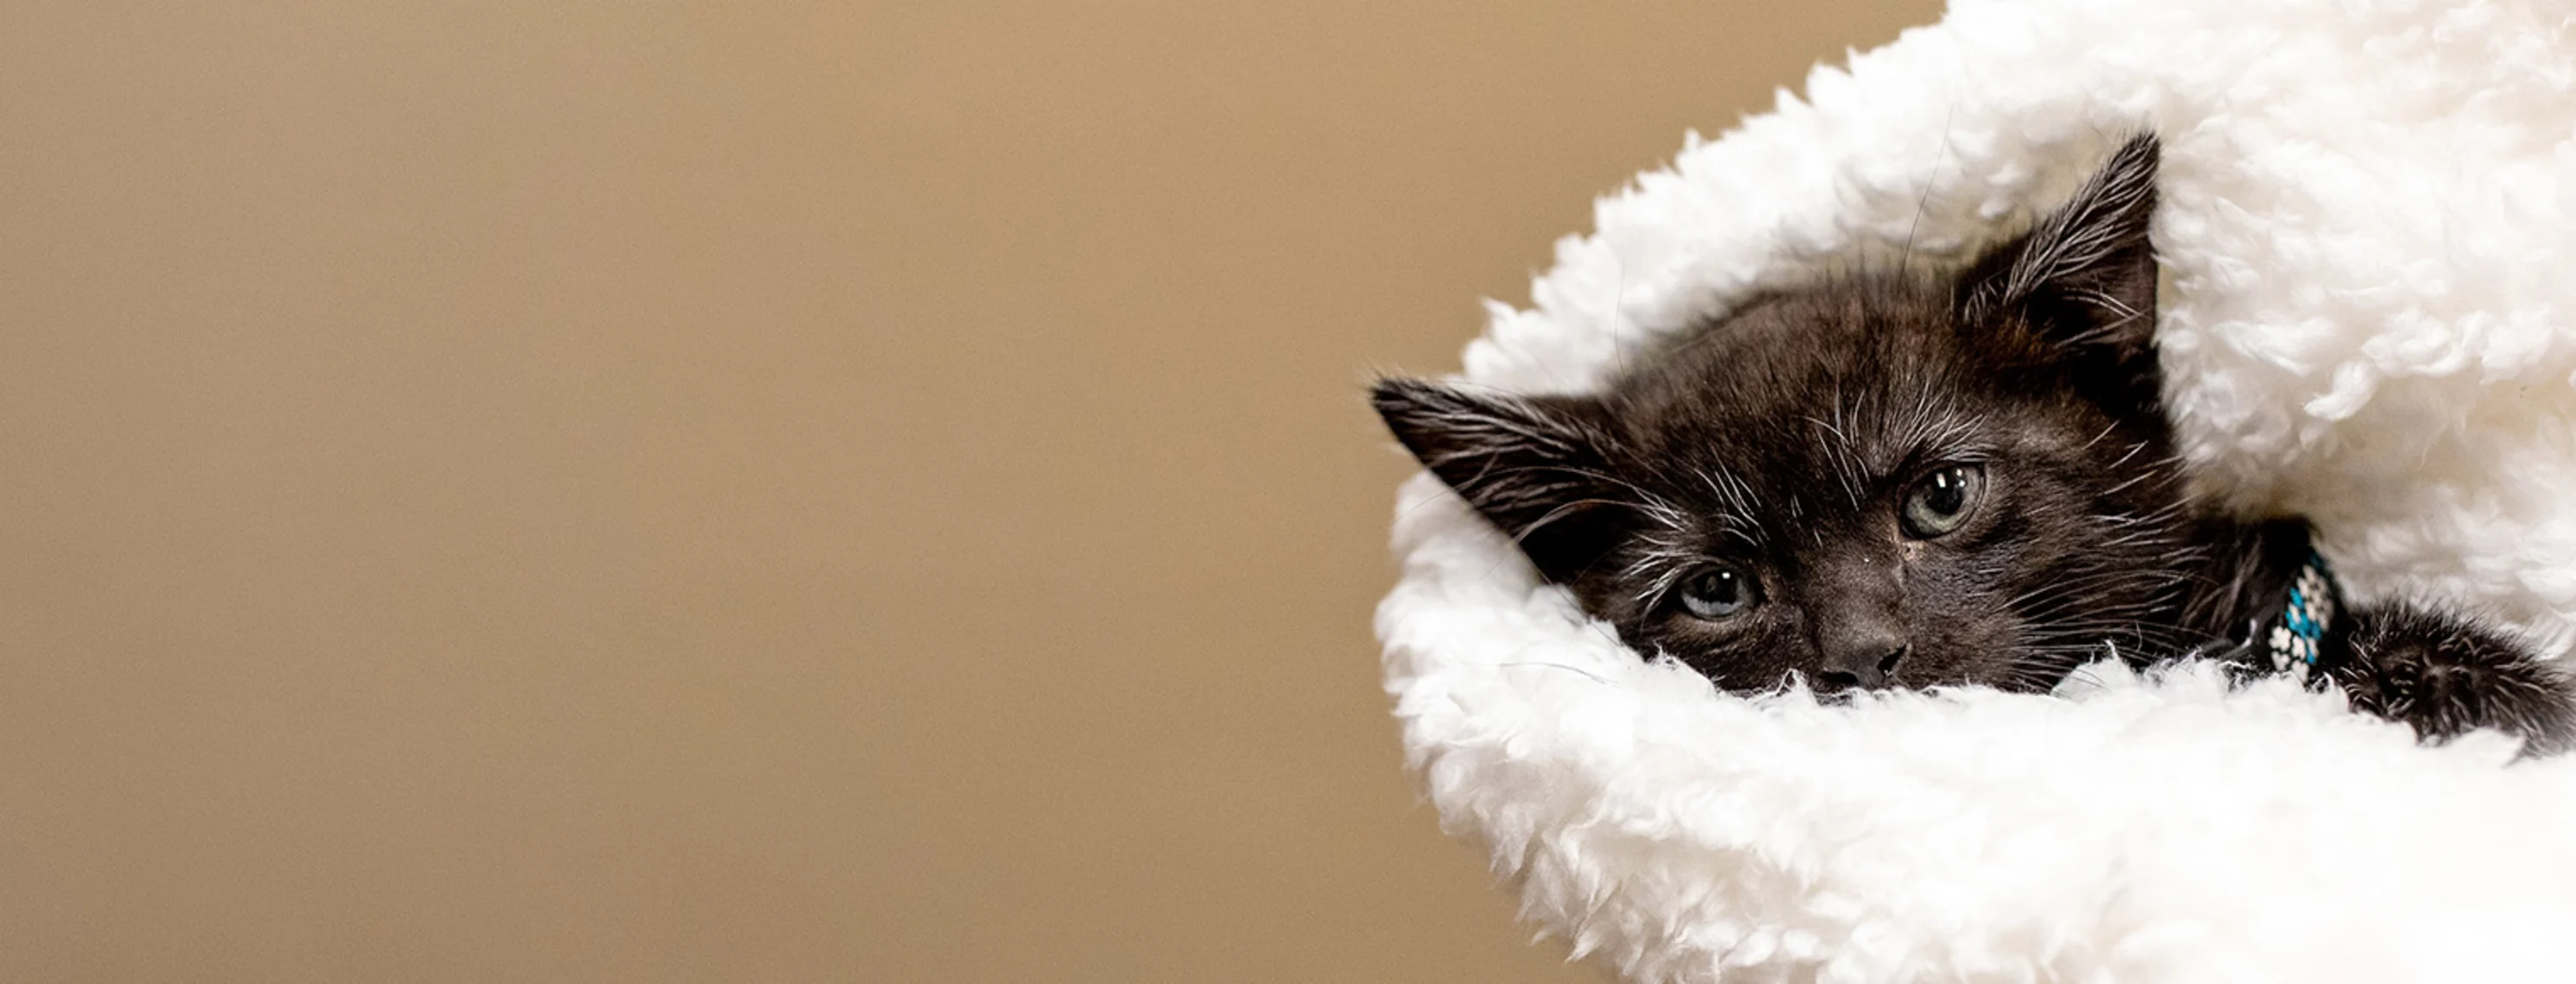 little black kitten in blanket